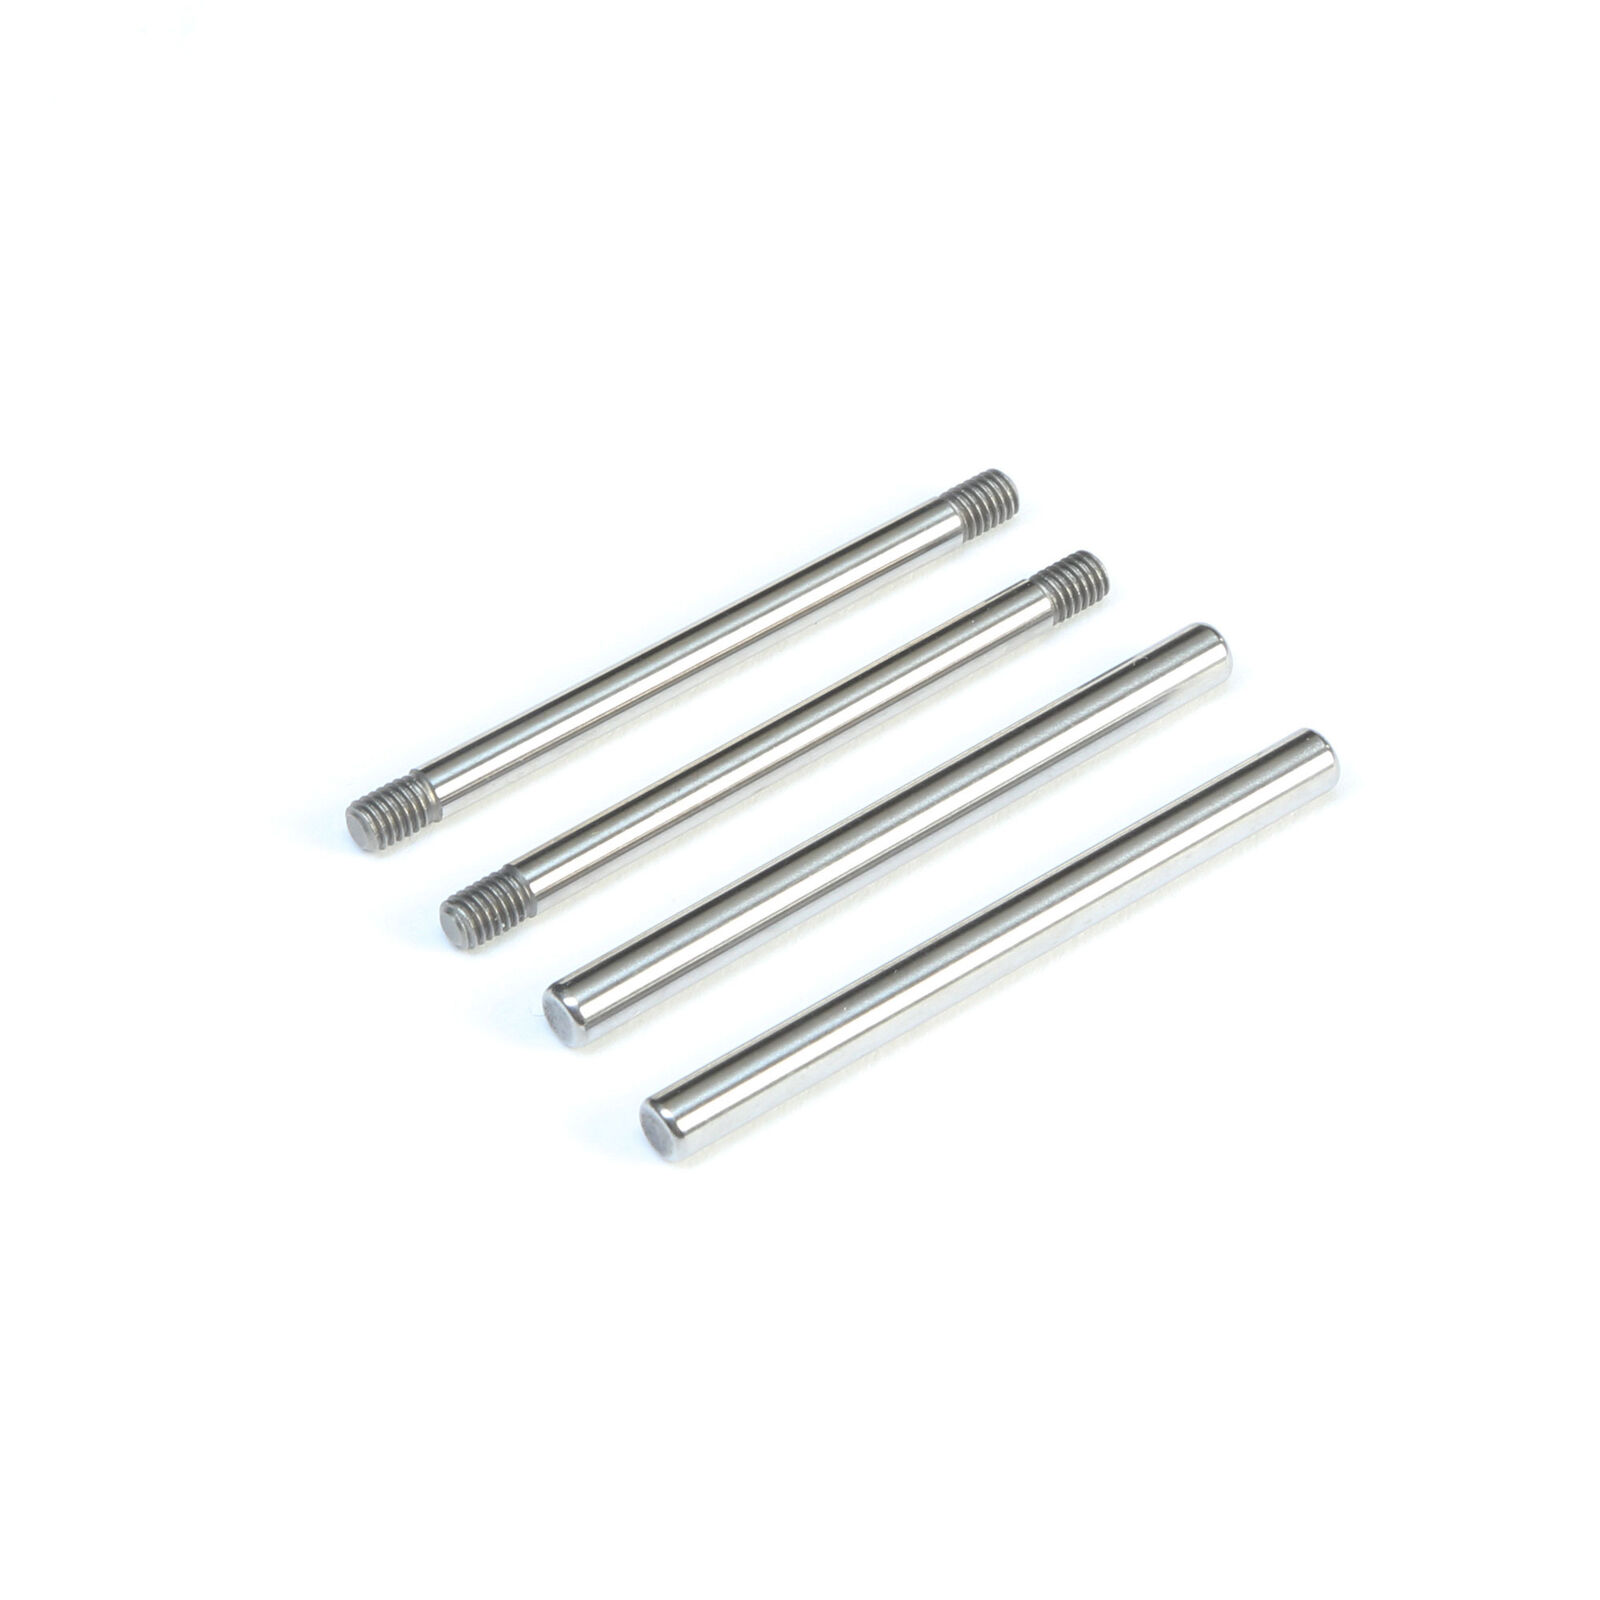 Rear Hinge Pin Set, Polished: All 22